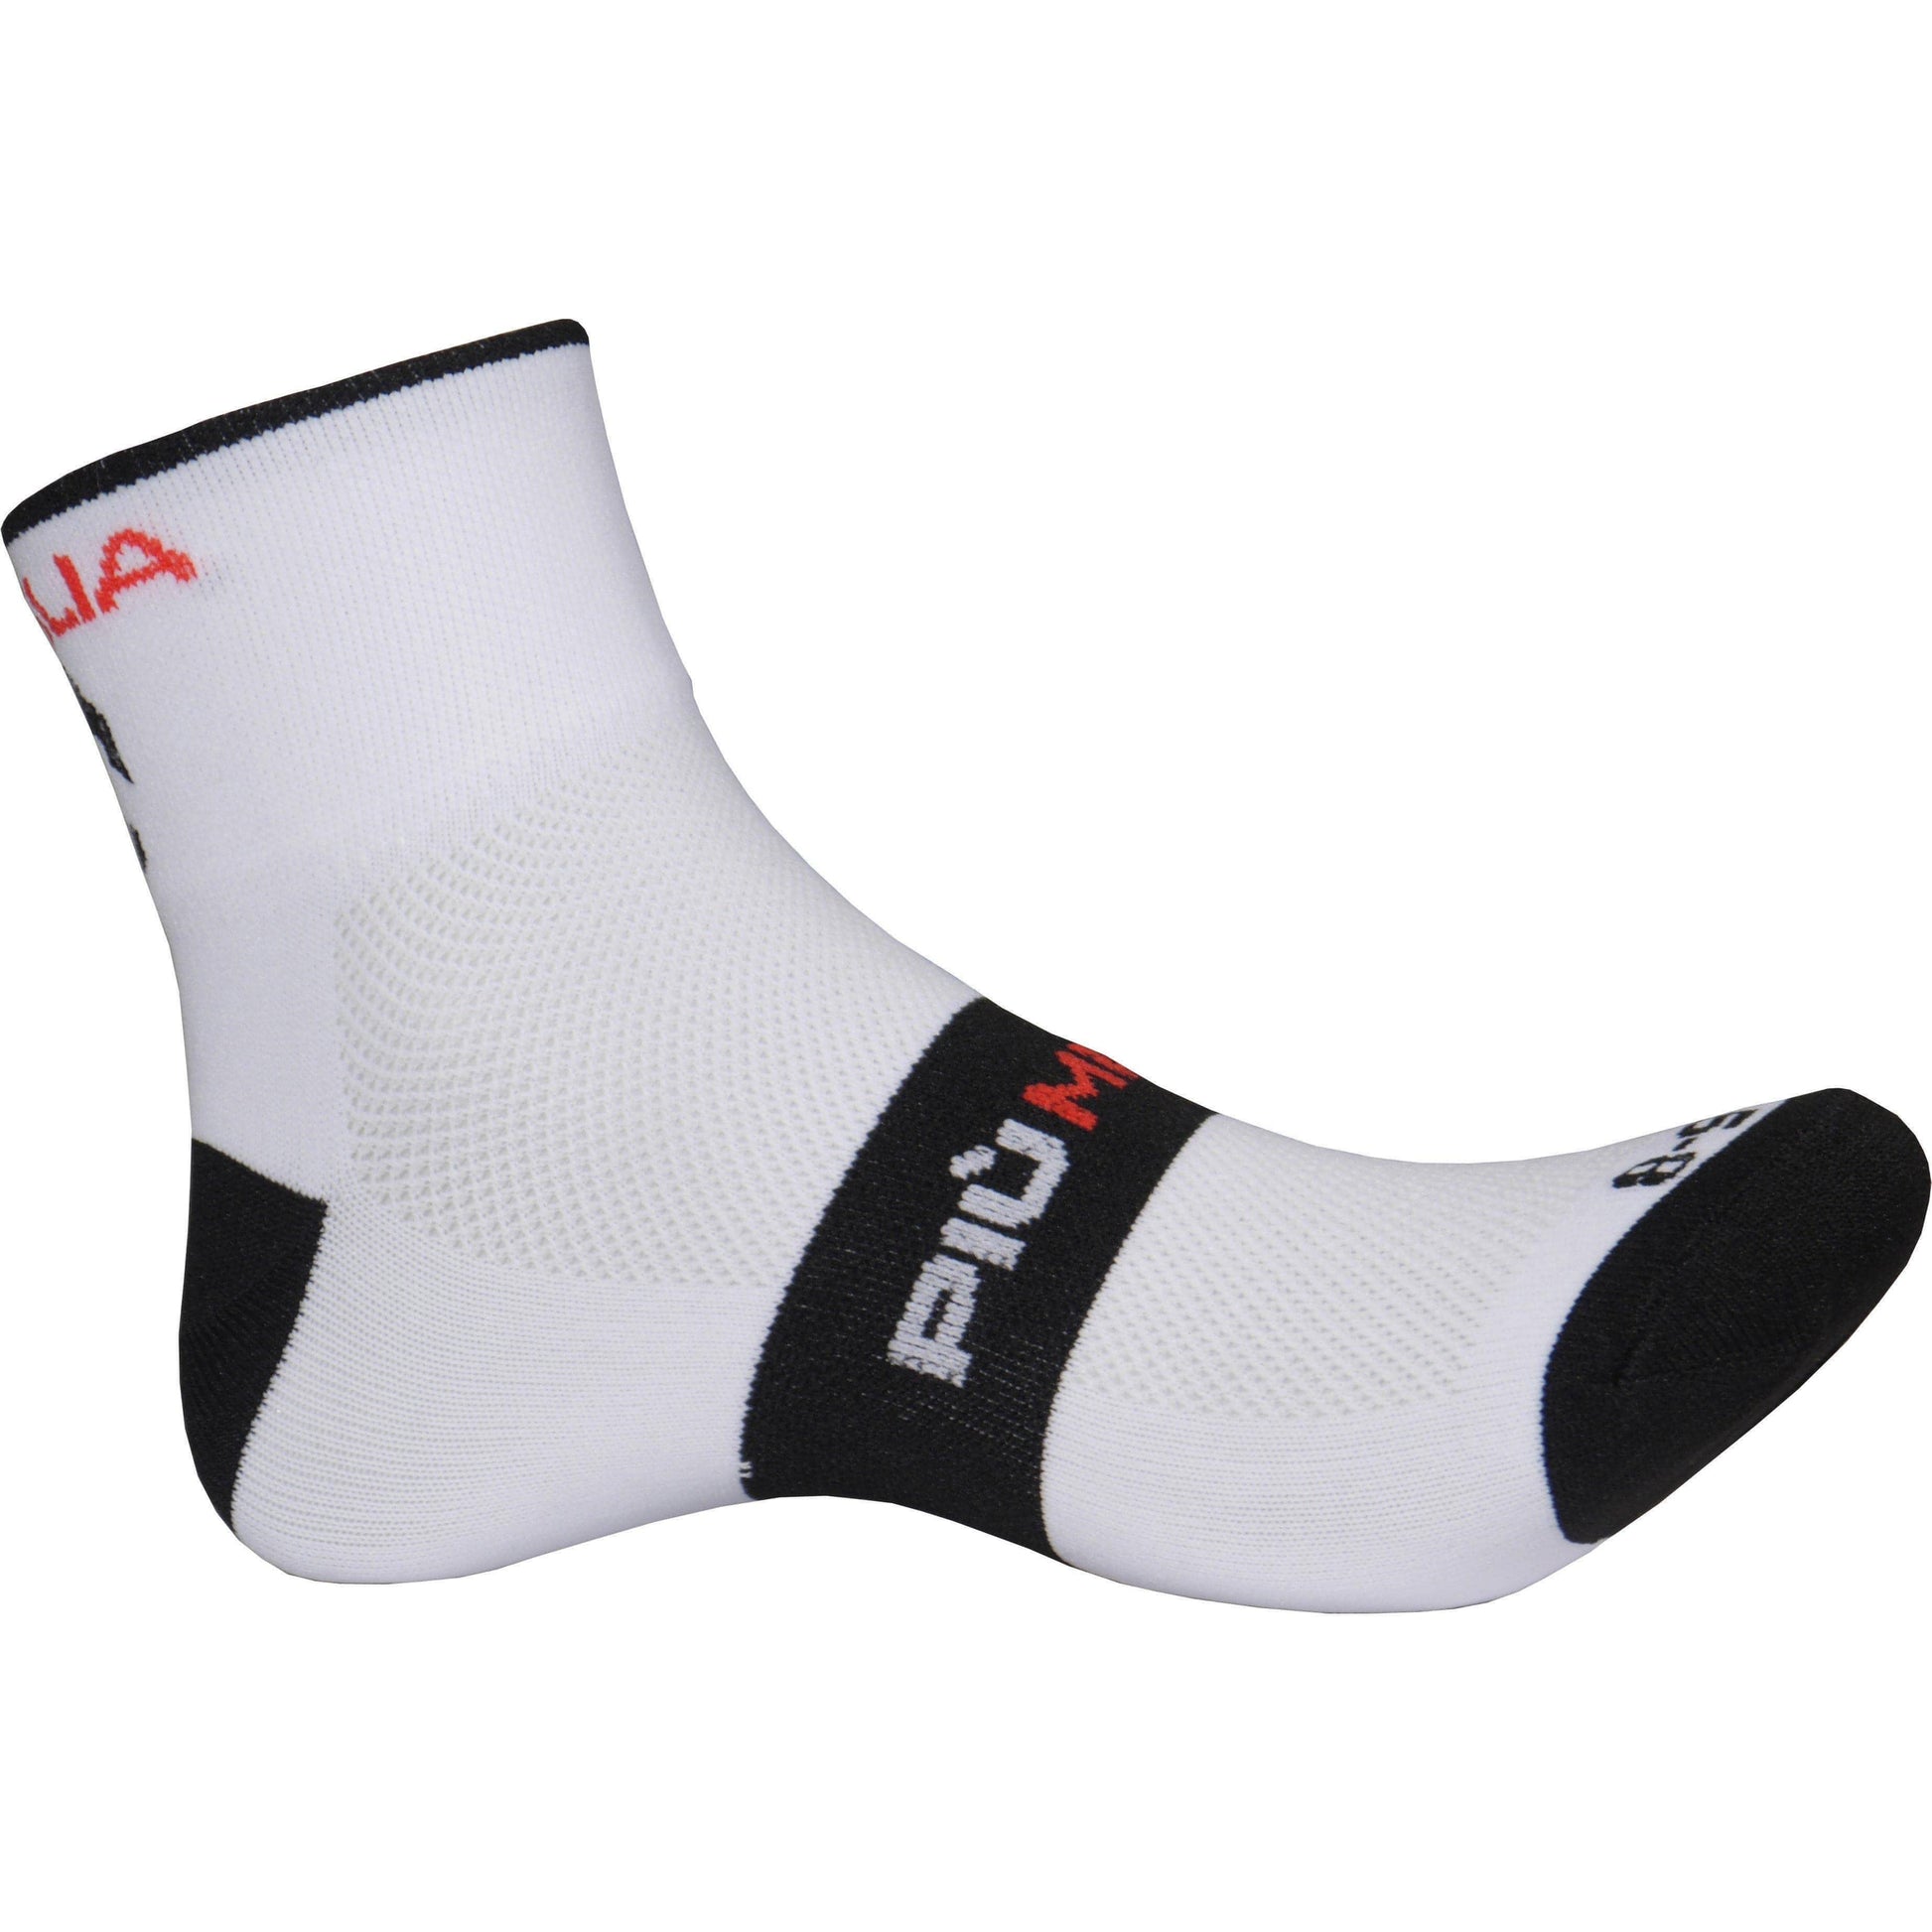 Piu Miglia Monza Cycling Socks - White 5055604342365 - Start Fitness